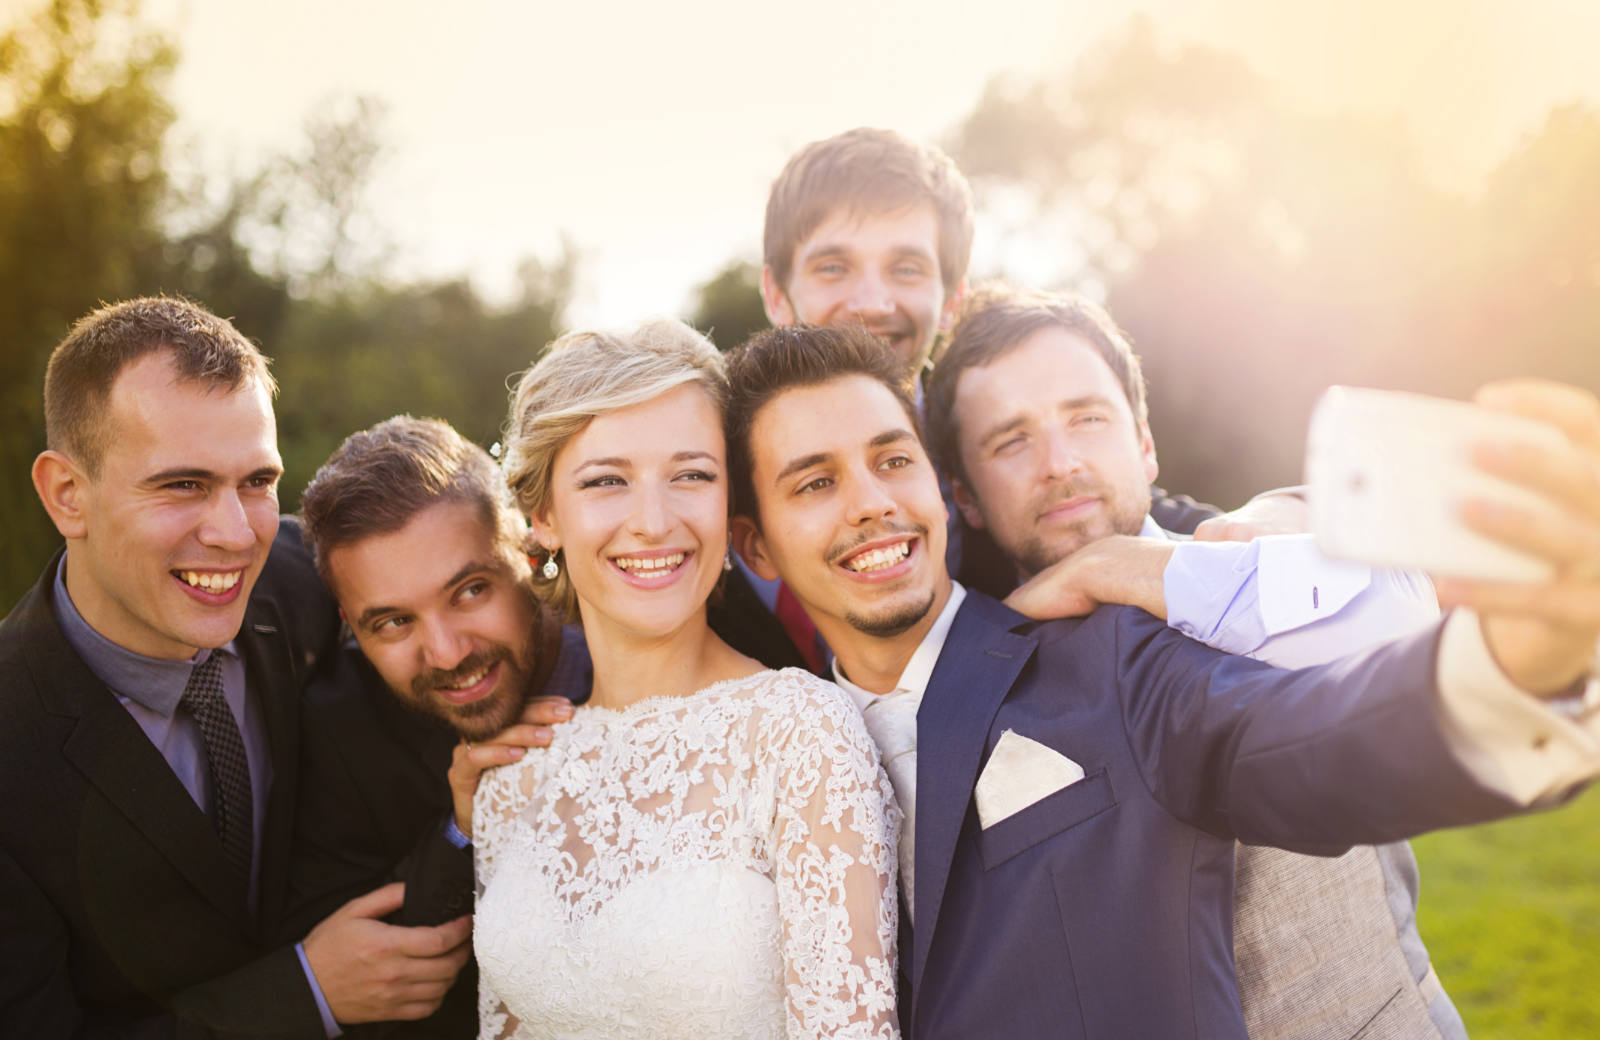 Wedding photo selfie with bride, groom, and groomsmen